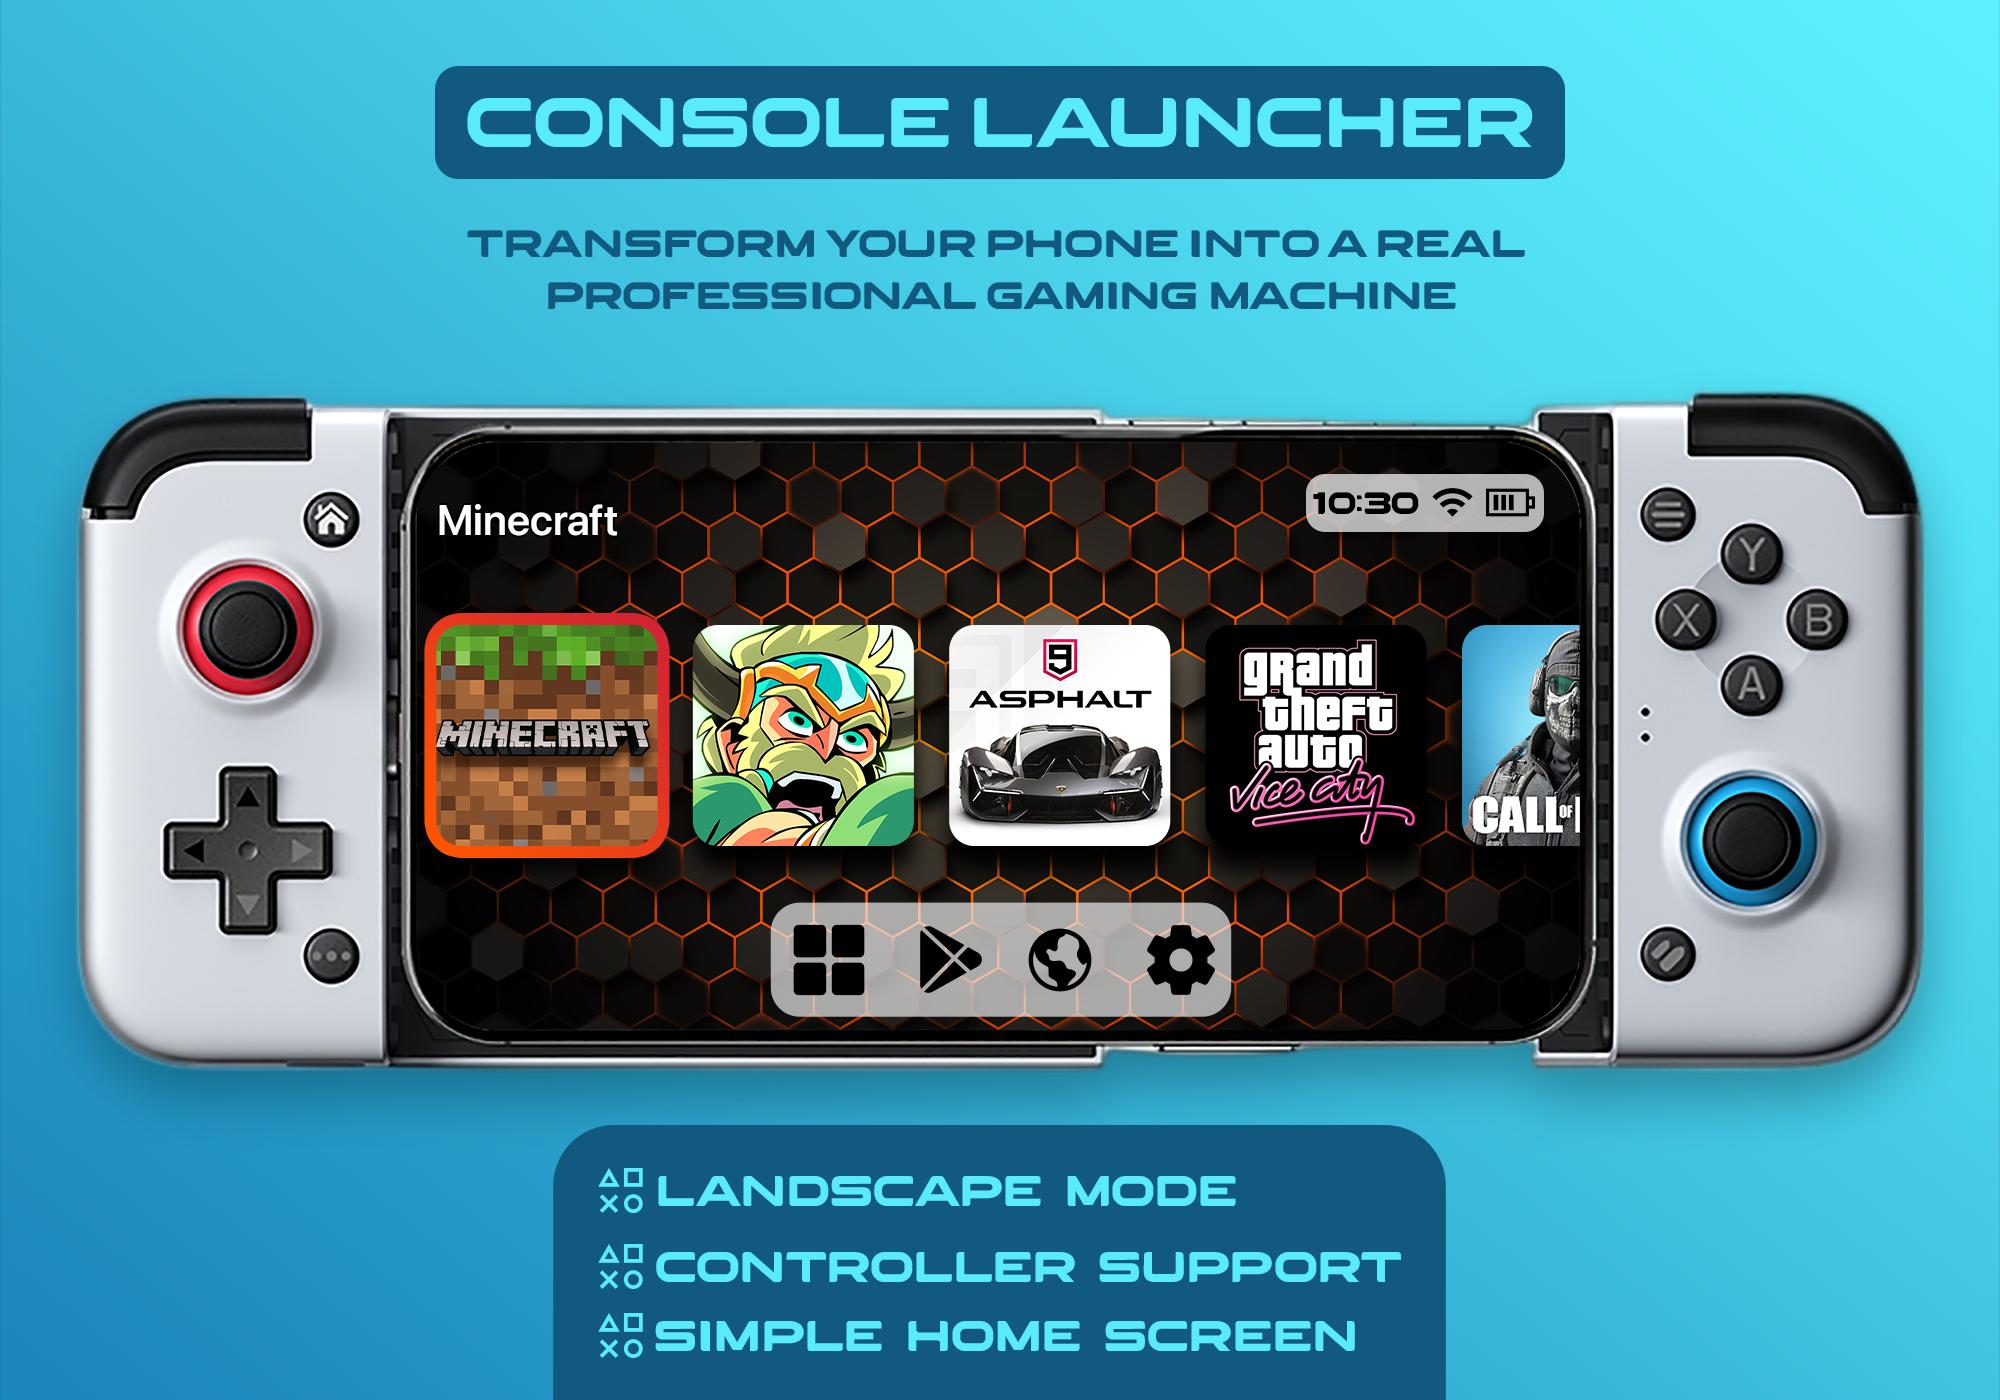 Creative Console Launcher. Status: Launched Consol. Юнитики купить